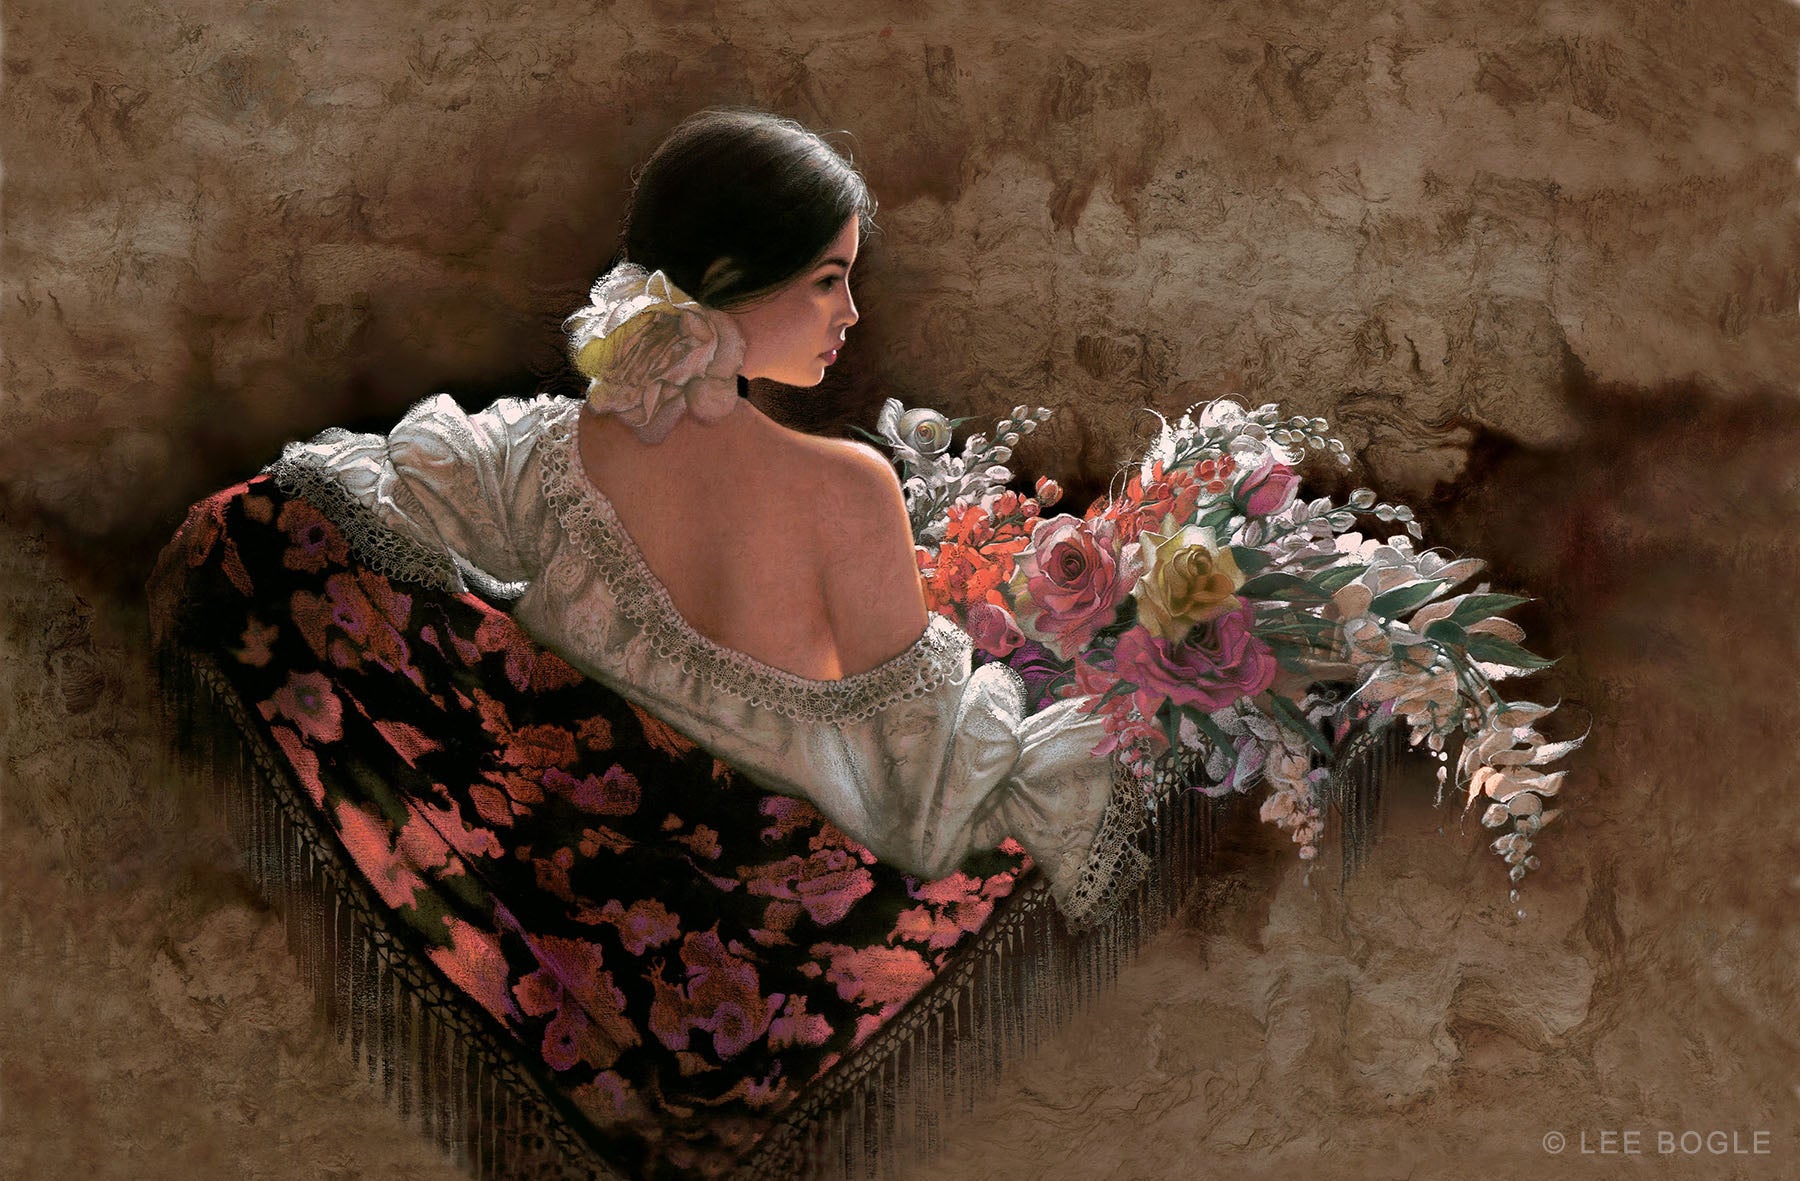 Lee Bogle - Flores de la Elegancia - Painting - Art Print